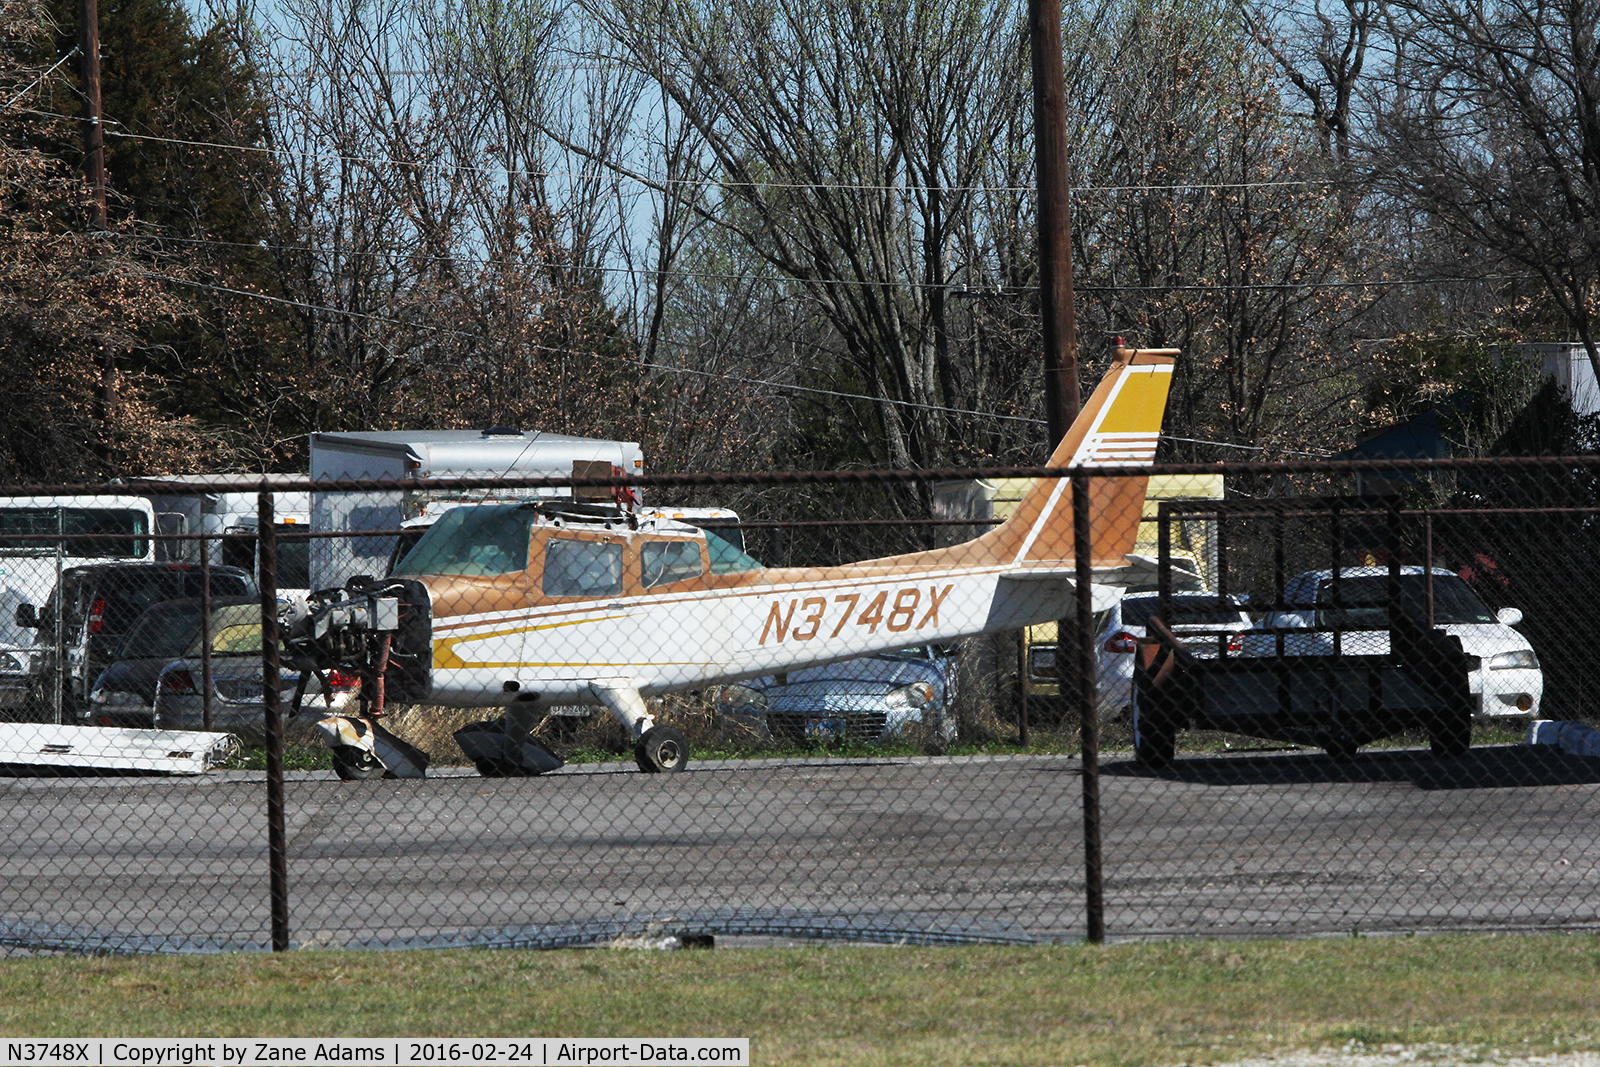 N3748X, Aero Commander 100-180 Lark Commander C/N 5060, Spotted in a yard near Rendon, Texas